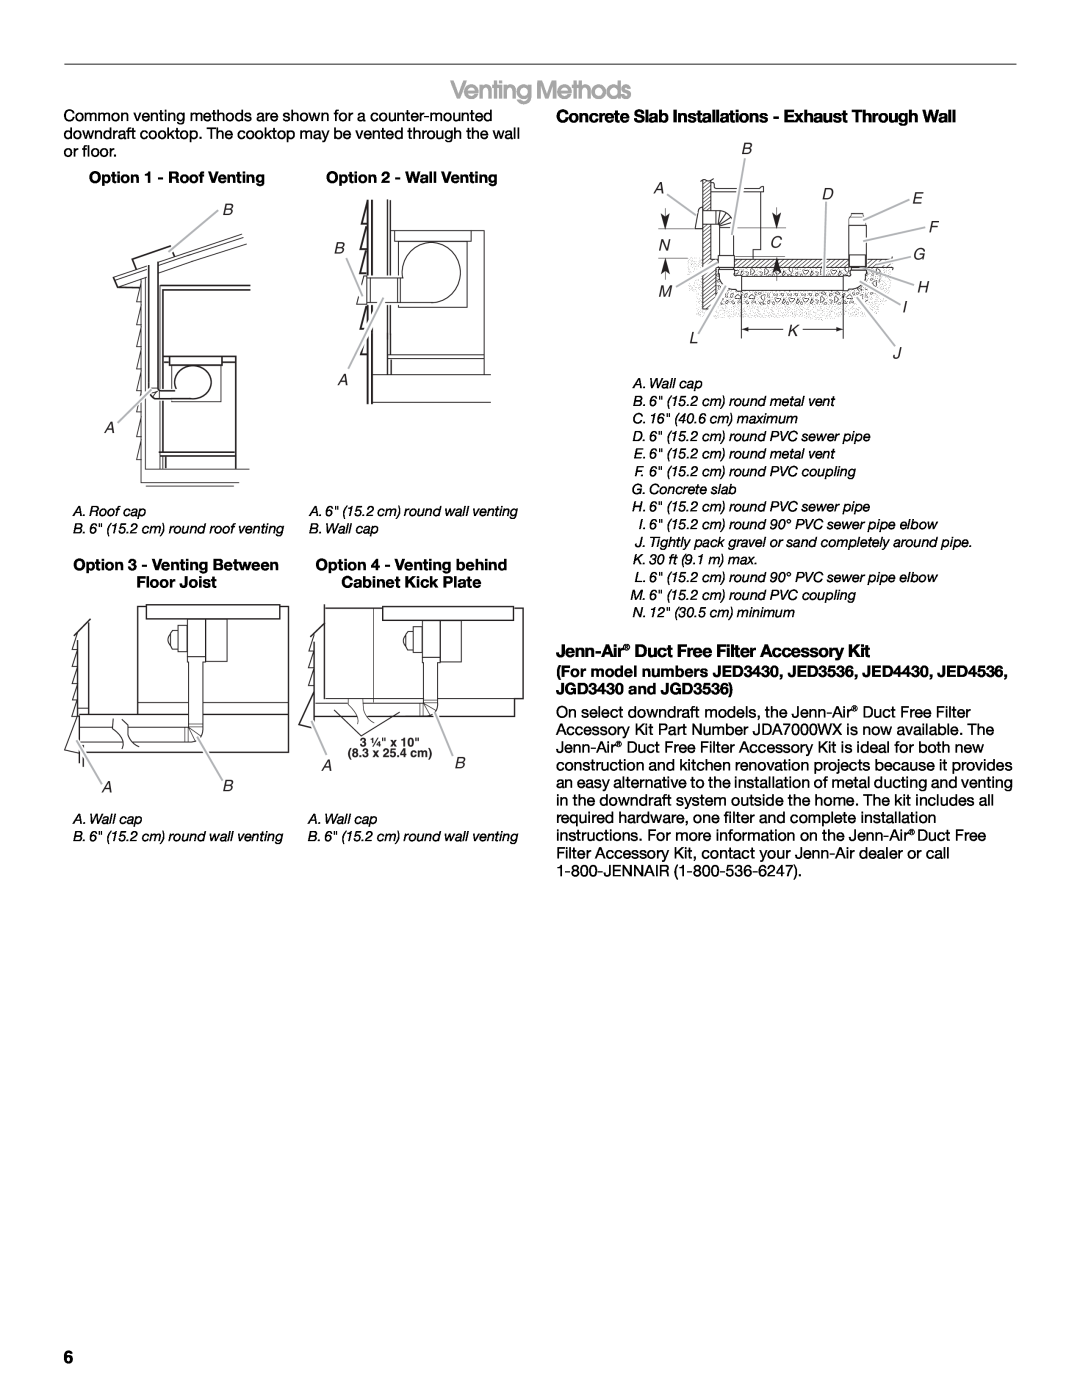 Jenn-Air W10574732A Venting Methods, Jenn-Air Duct Free Filter Accessory Kit, Option 1 - Roof Venting, B Ad Nc M 